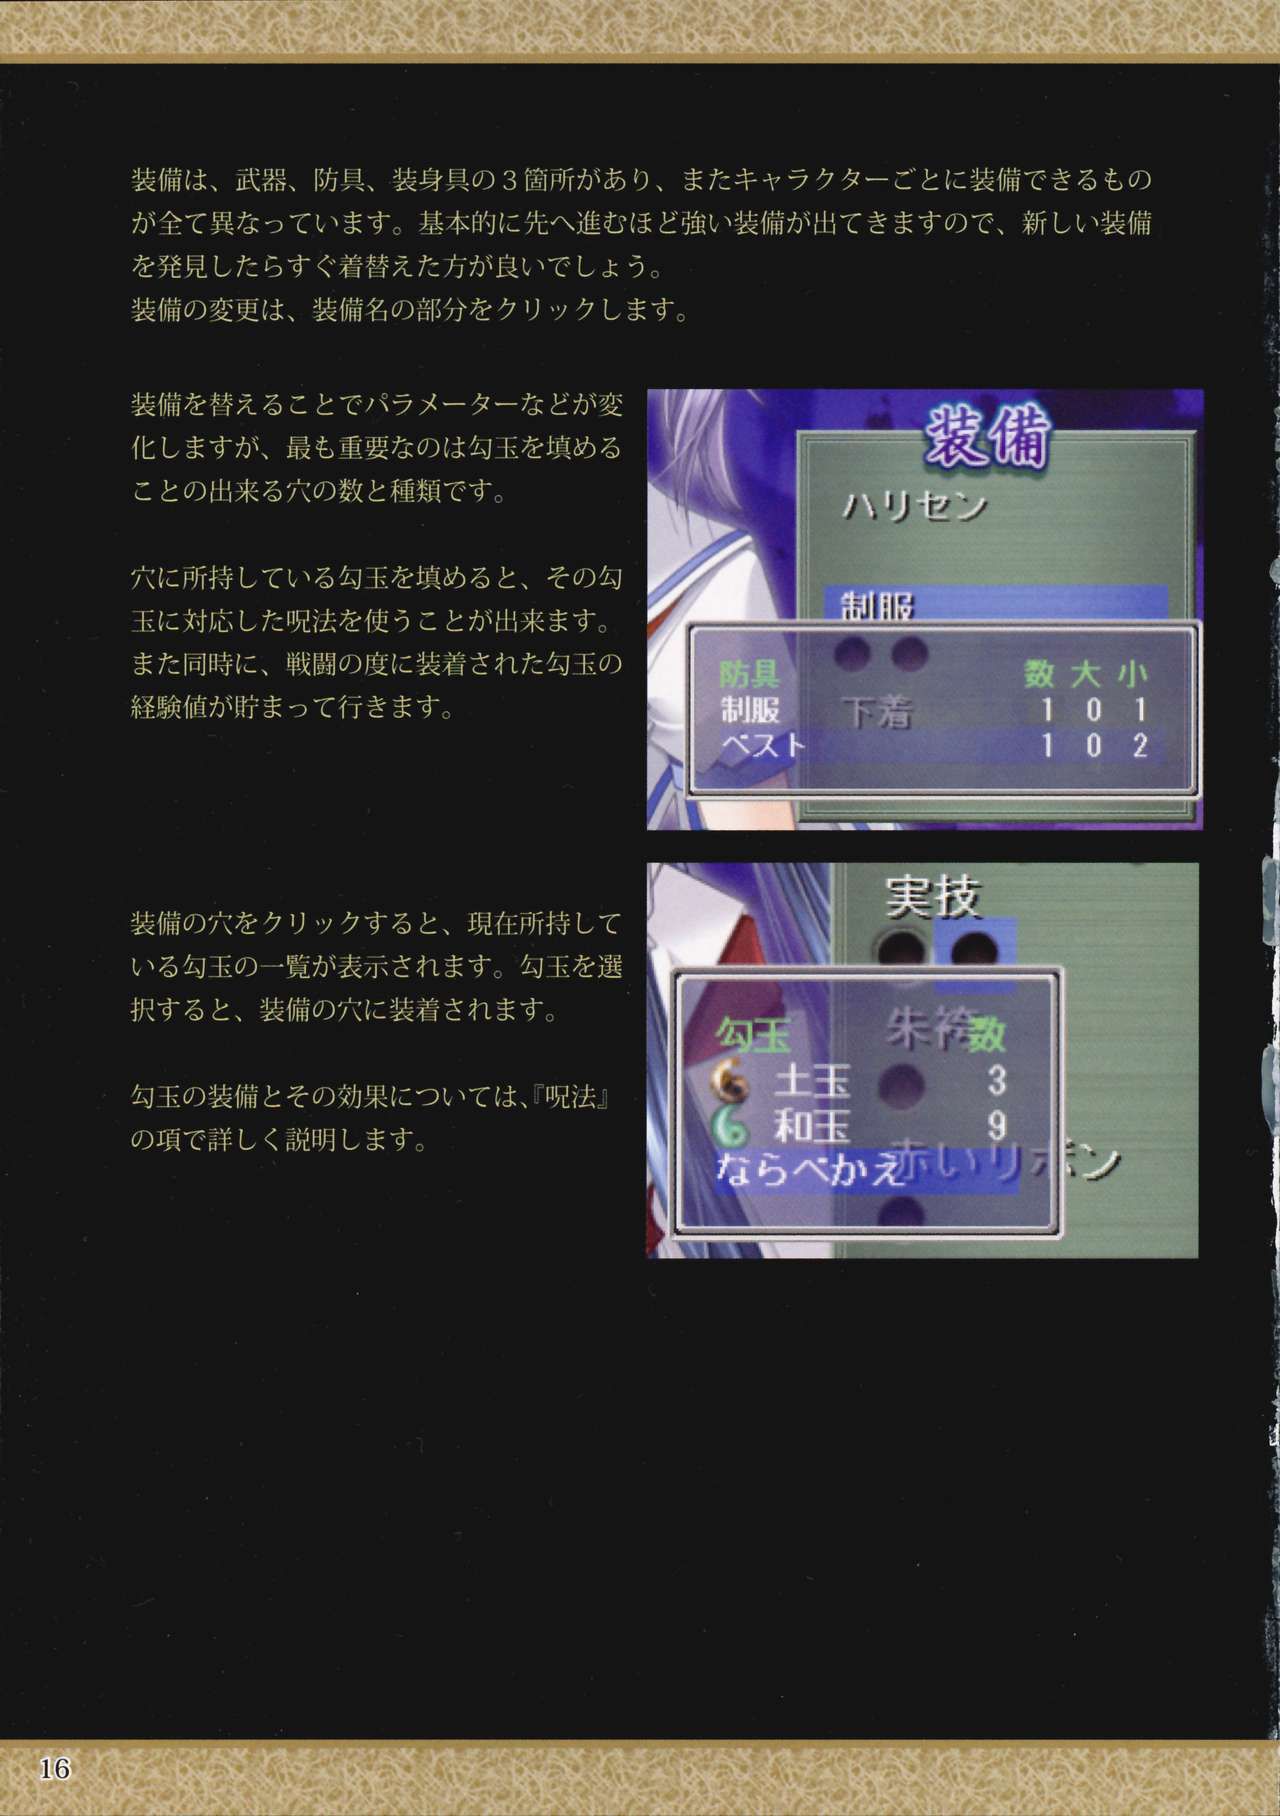 IZUMO 3 - Special Edition Manual 33